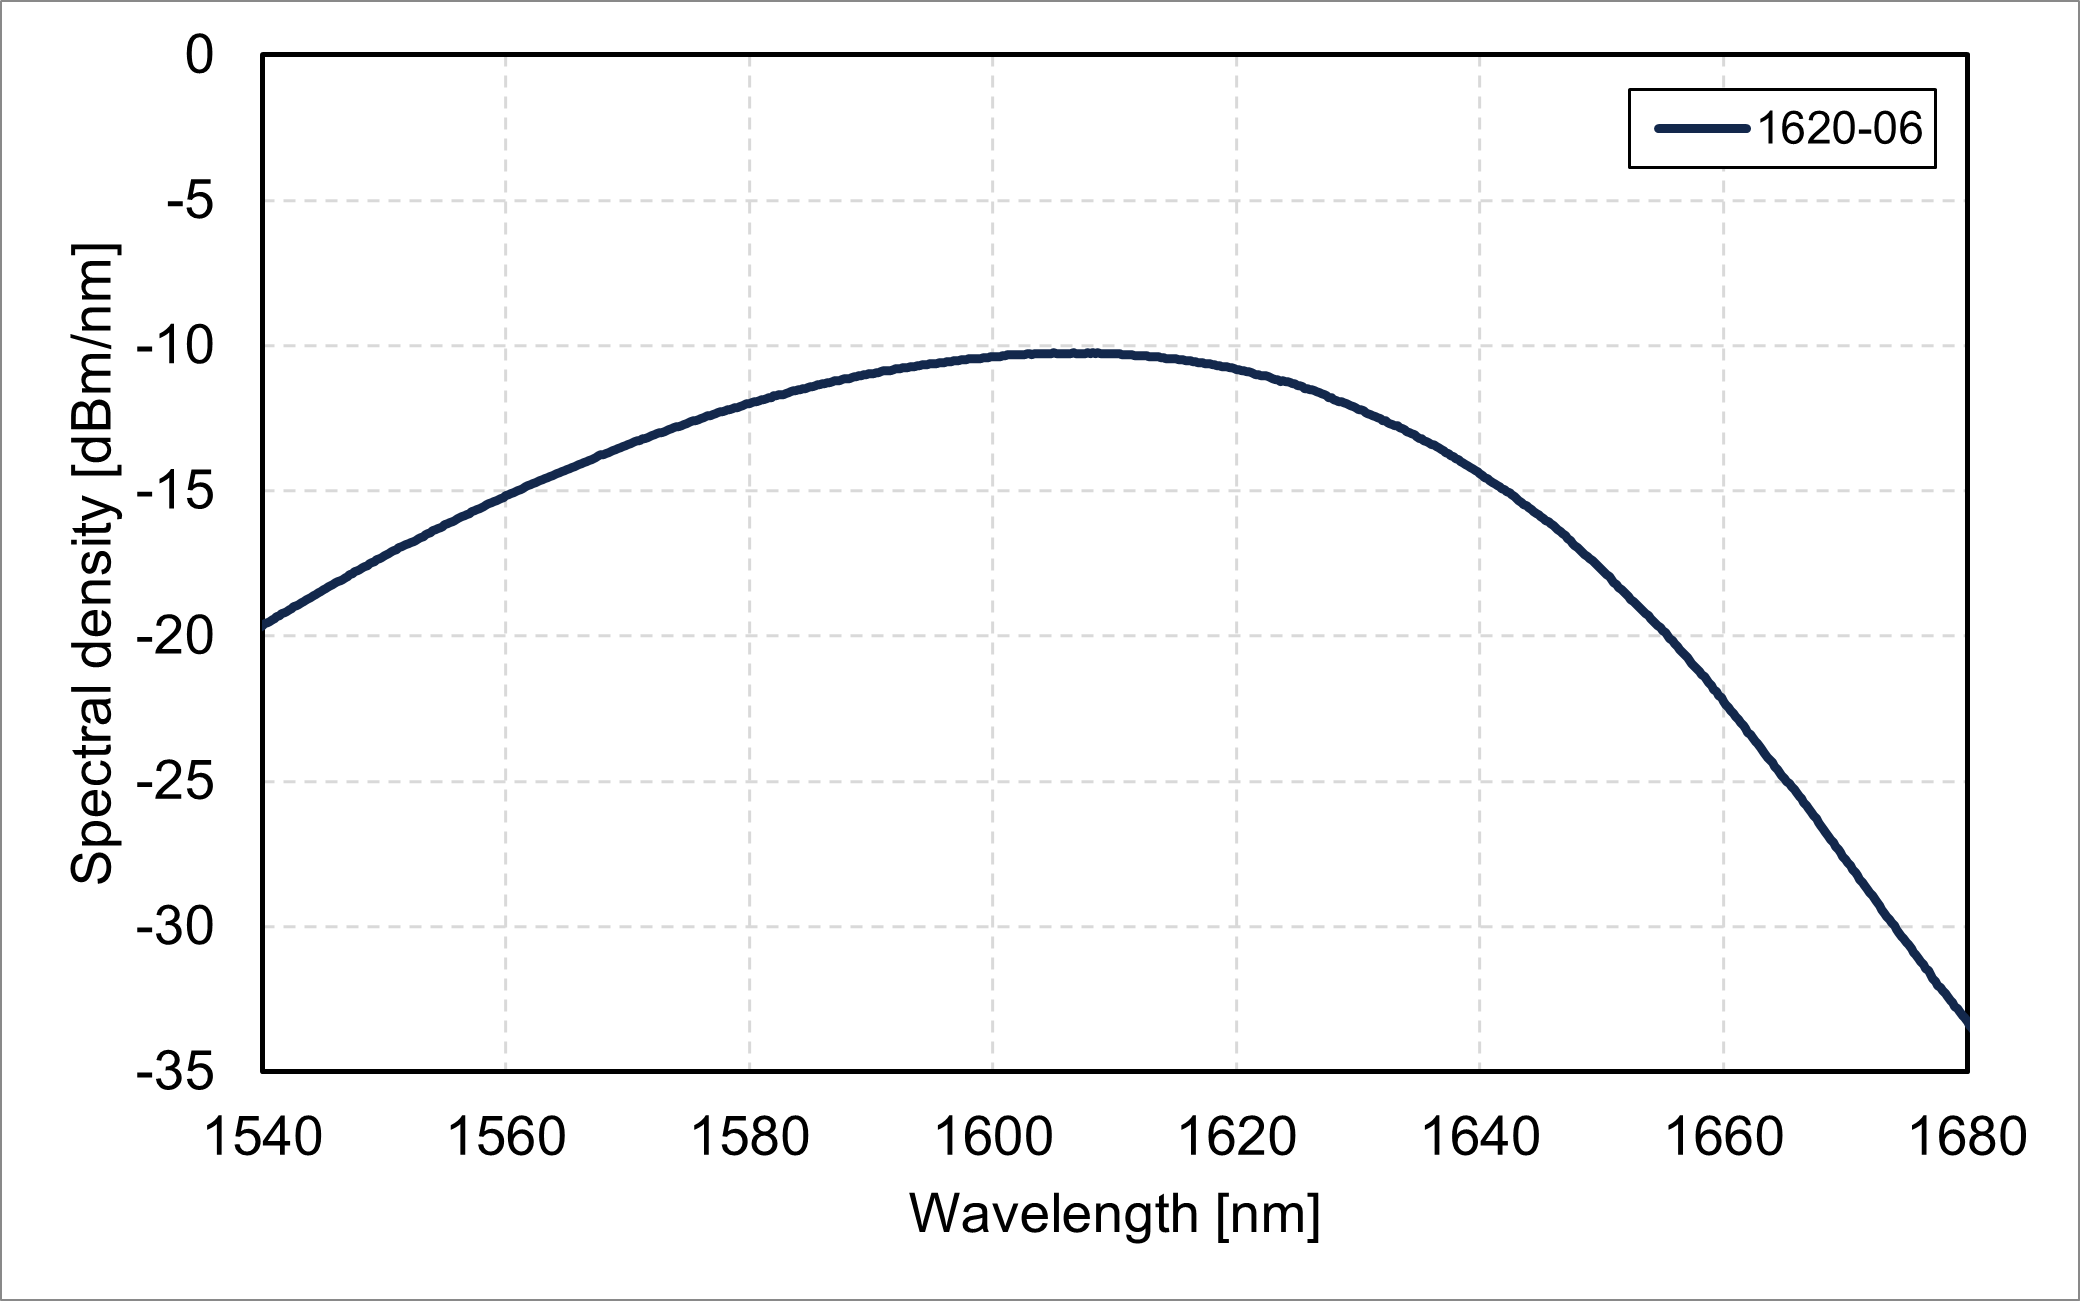 Spectral density vs. wavelength (1620-06)